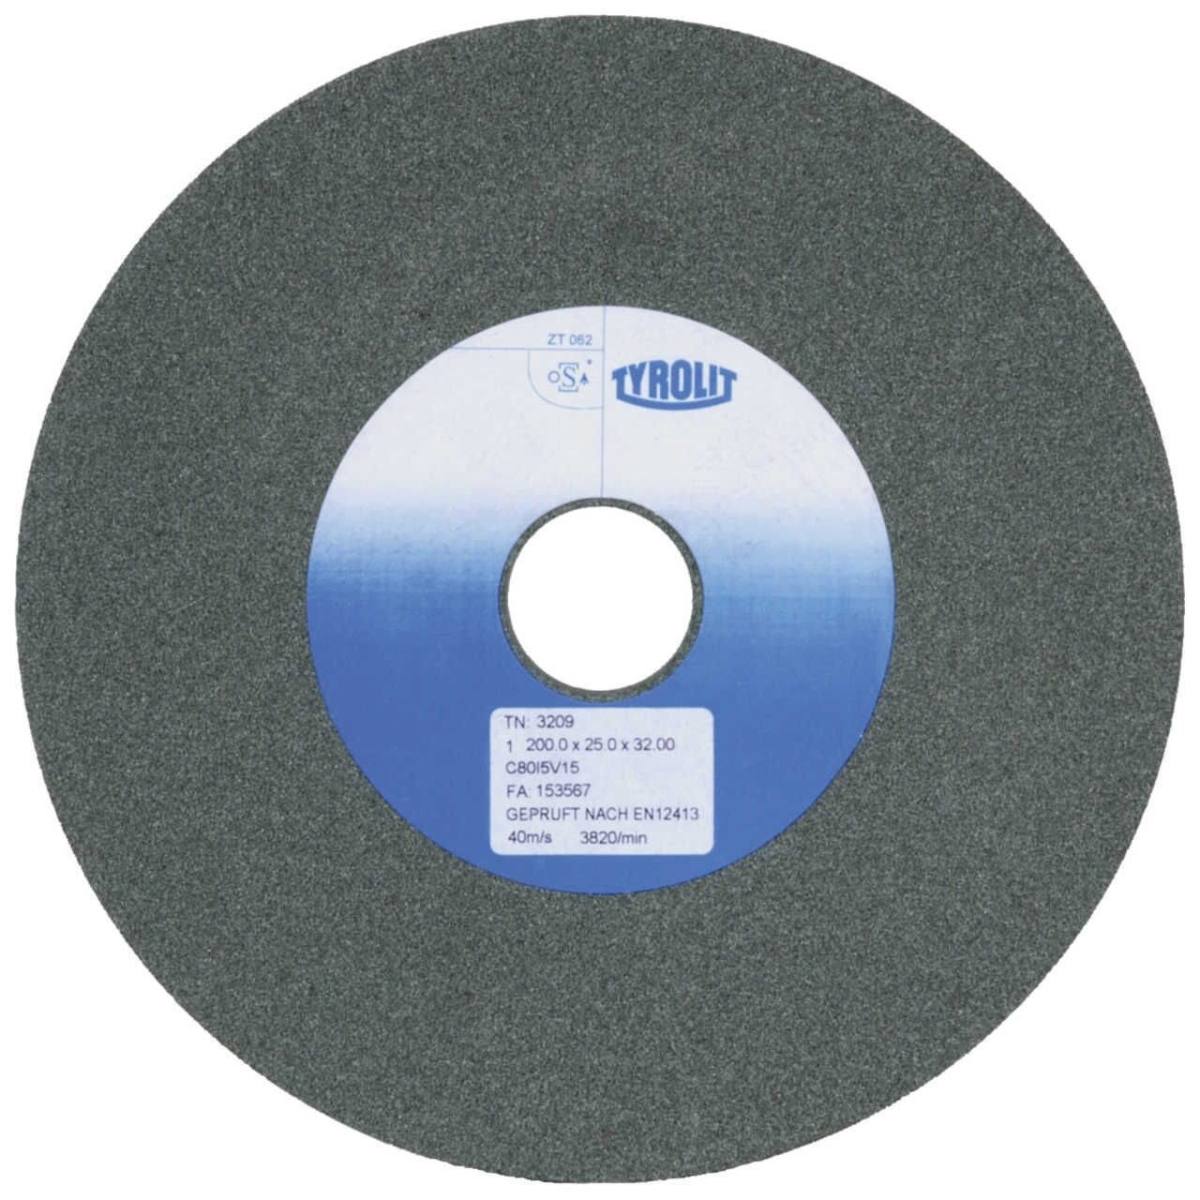 TYROLIT discos de desbaste cerámicos convencionales DxDxH 125x20x32 Para metales no férricos, forma: 1, Art. 34287482